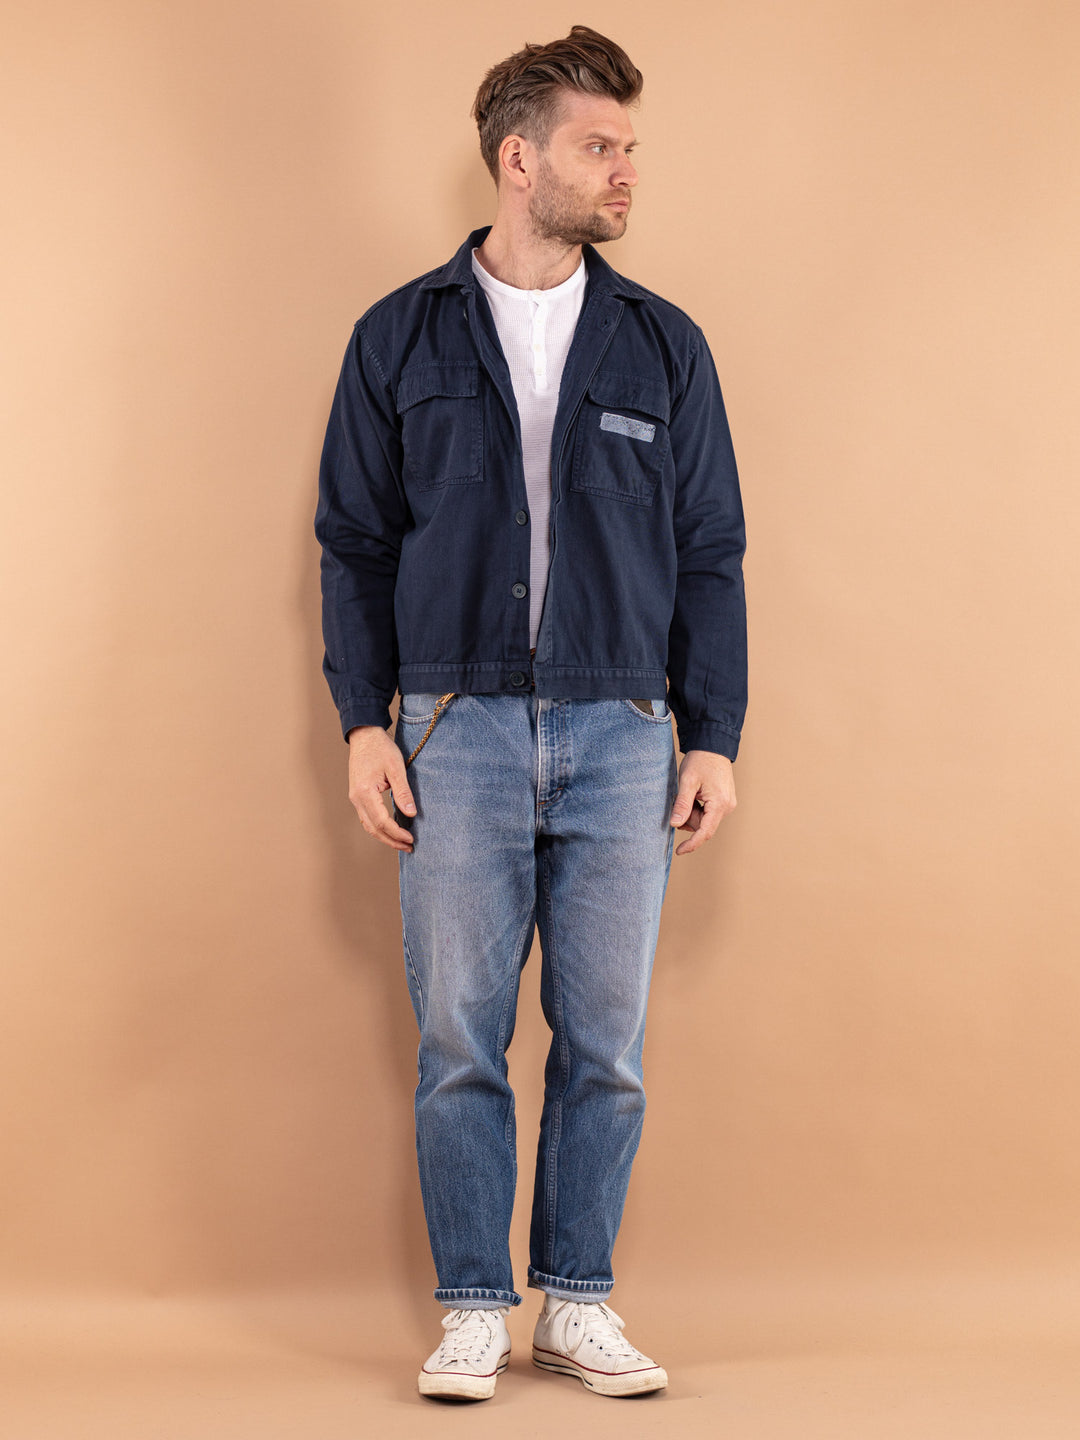 80s Cropped Work Jacket, Size L Mechanic Jacket, Vintage Workwear, Garage Jacket, Vintage Blue Collar Chore Jacket, Industrial Utility Wear